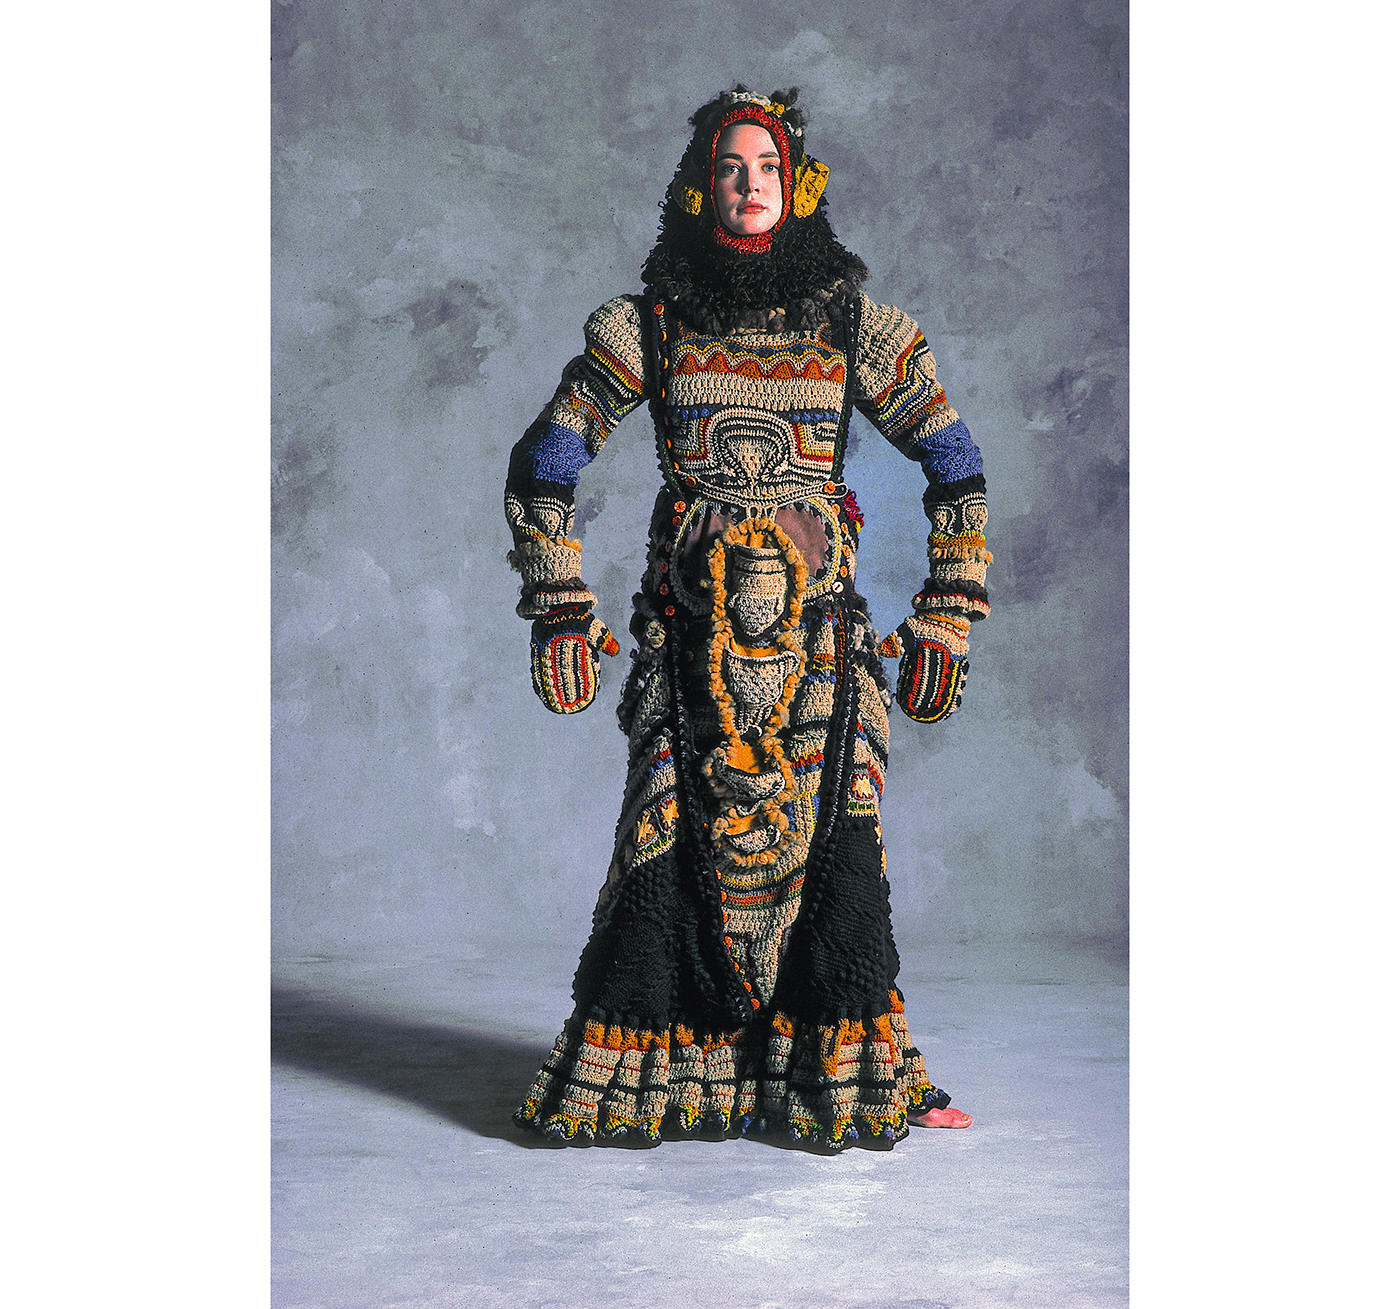 Janet Lipkin, “African Mask” (1970), wool, leather, wood (courtesy Philadelphia Museum of Art, lent by the Metropolitan Museum of Art, gift of Muriel Kallis Newman, photo by Otto Stupakoff, © Julie Schafler Dale)